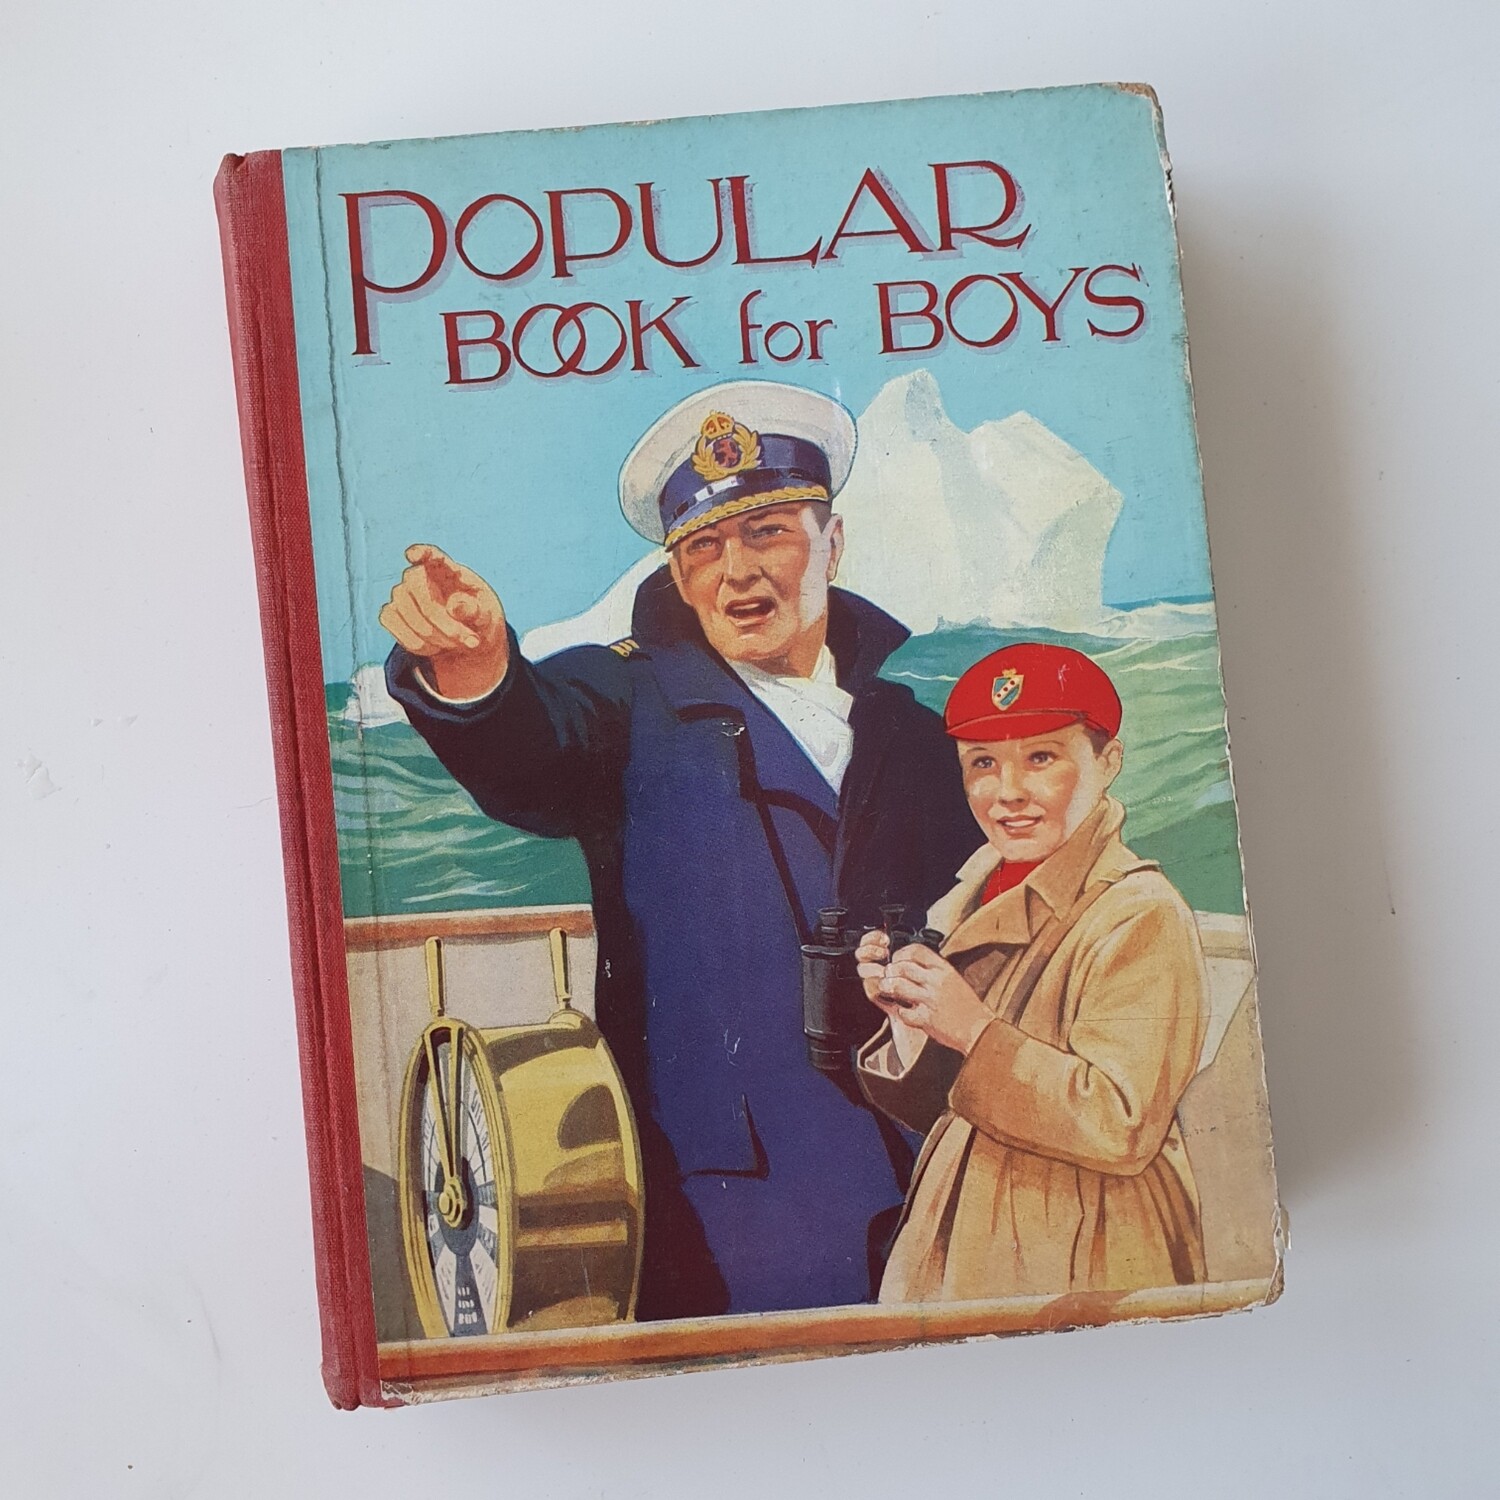 Popular book for Boys, Iceberg, sailor, boat c. 1950s